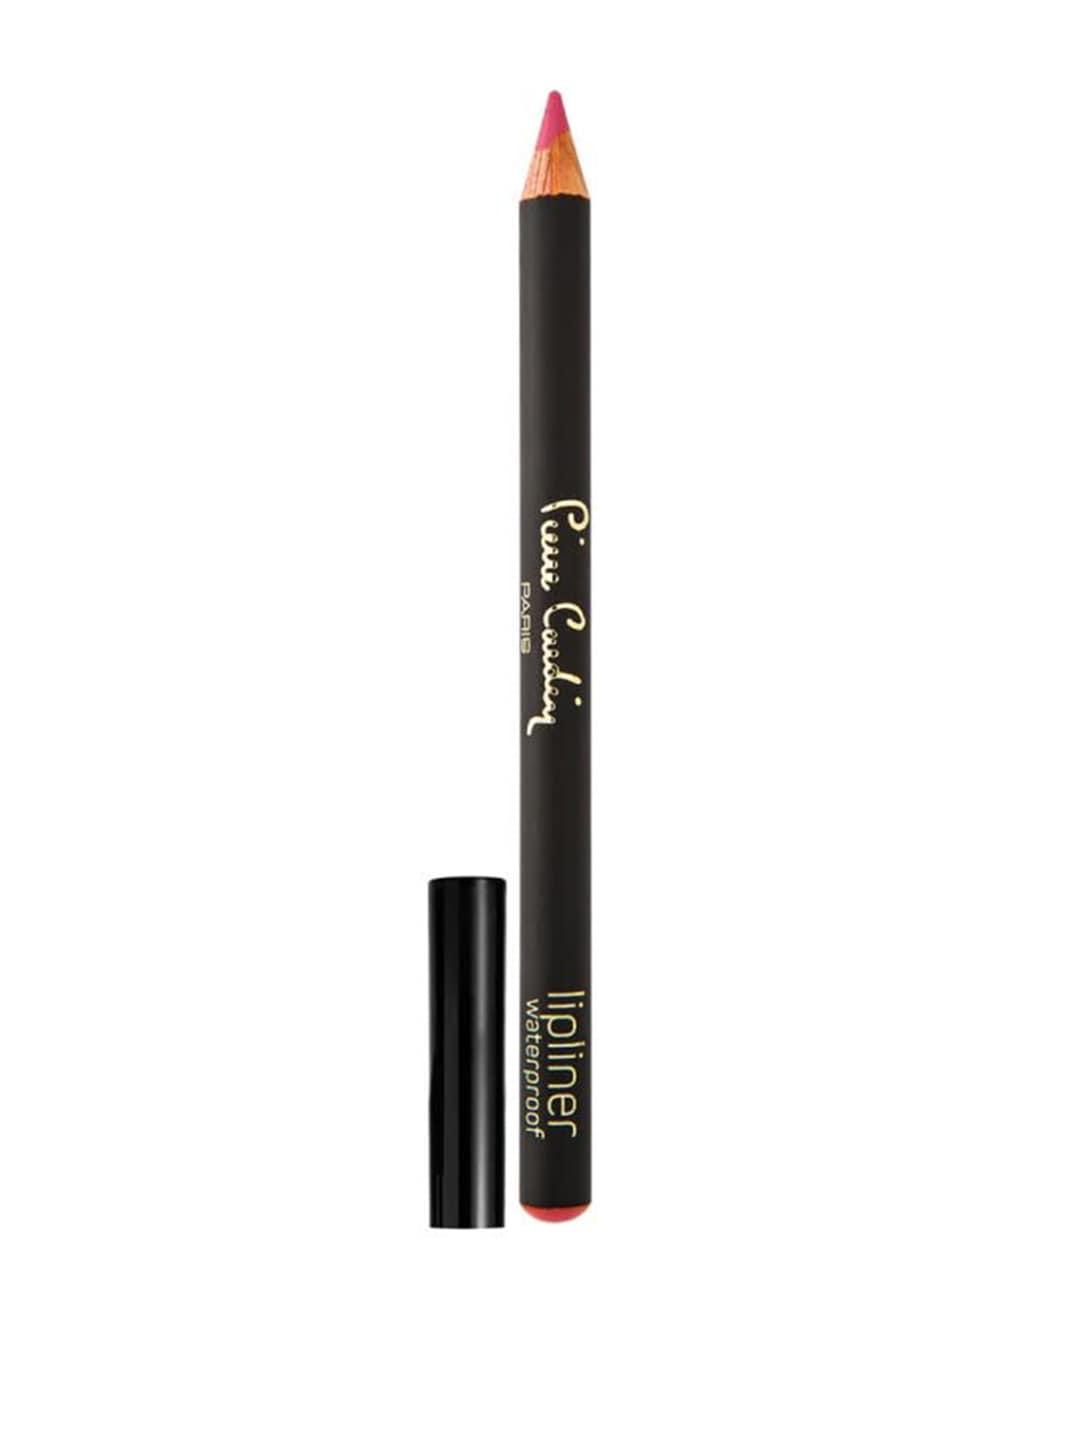 pierre cardin paris waterproof & longlasting lip liner pencil with vitamin e 0.4g - sweet pink 605